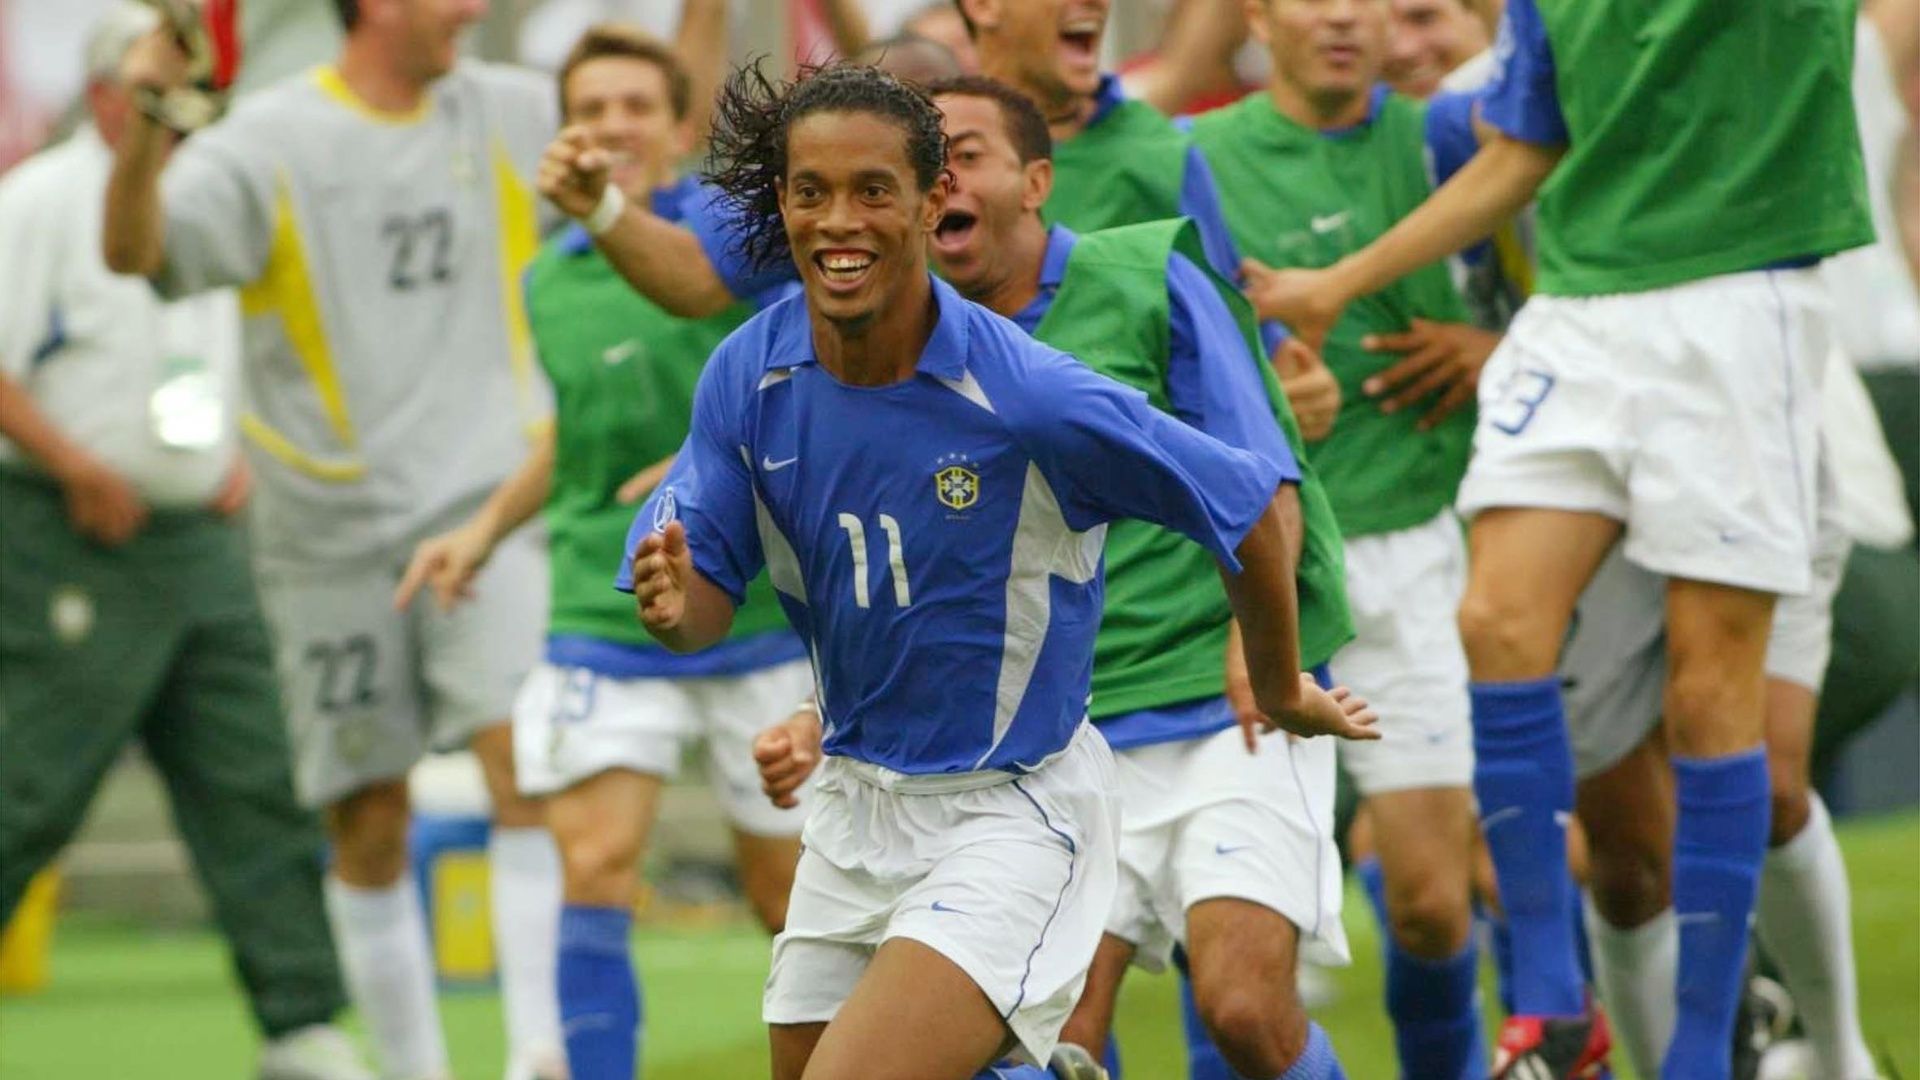 24º - Paris Saint-Germain (FRA) - 5 títulos / 1994 - Raí; 2002 - Ronaldinho Gaúcho [foto]; 2018 - Presnel Kimpembe, Kylian Mbappé e Alphonse Aréola.